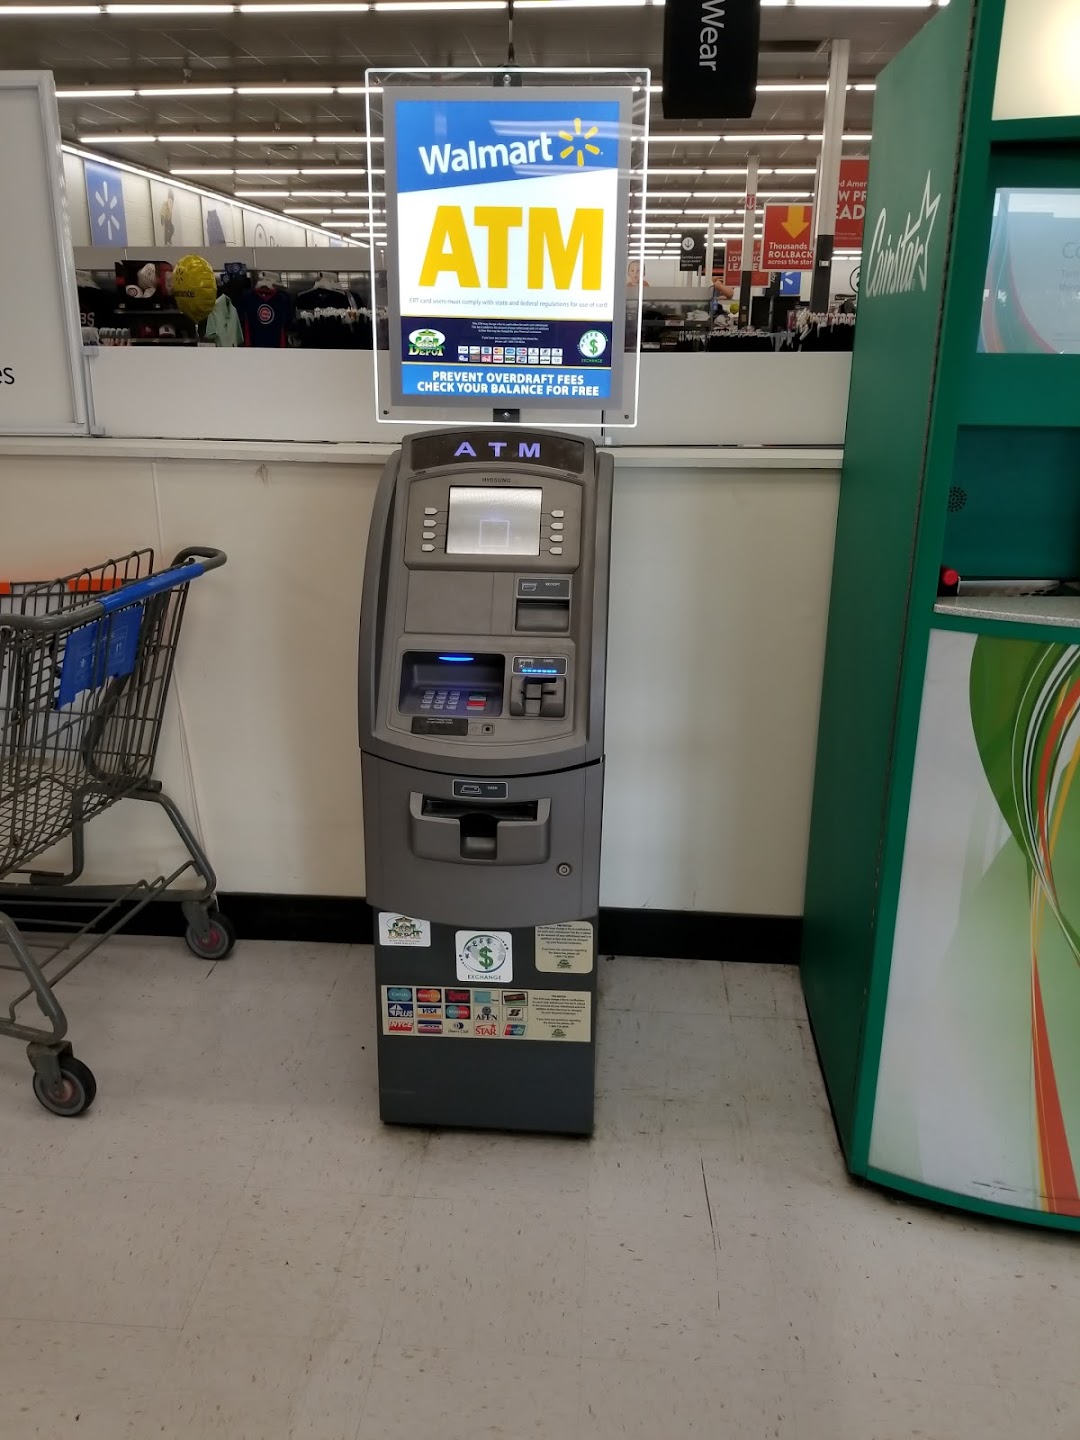 Walmart ATM